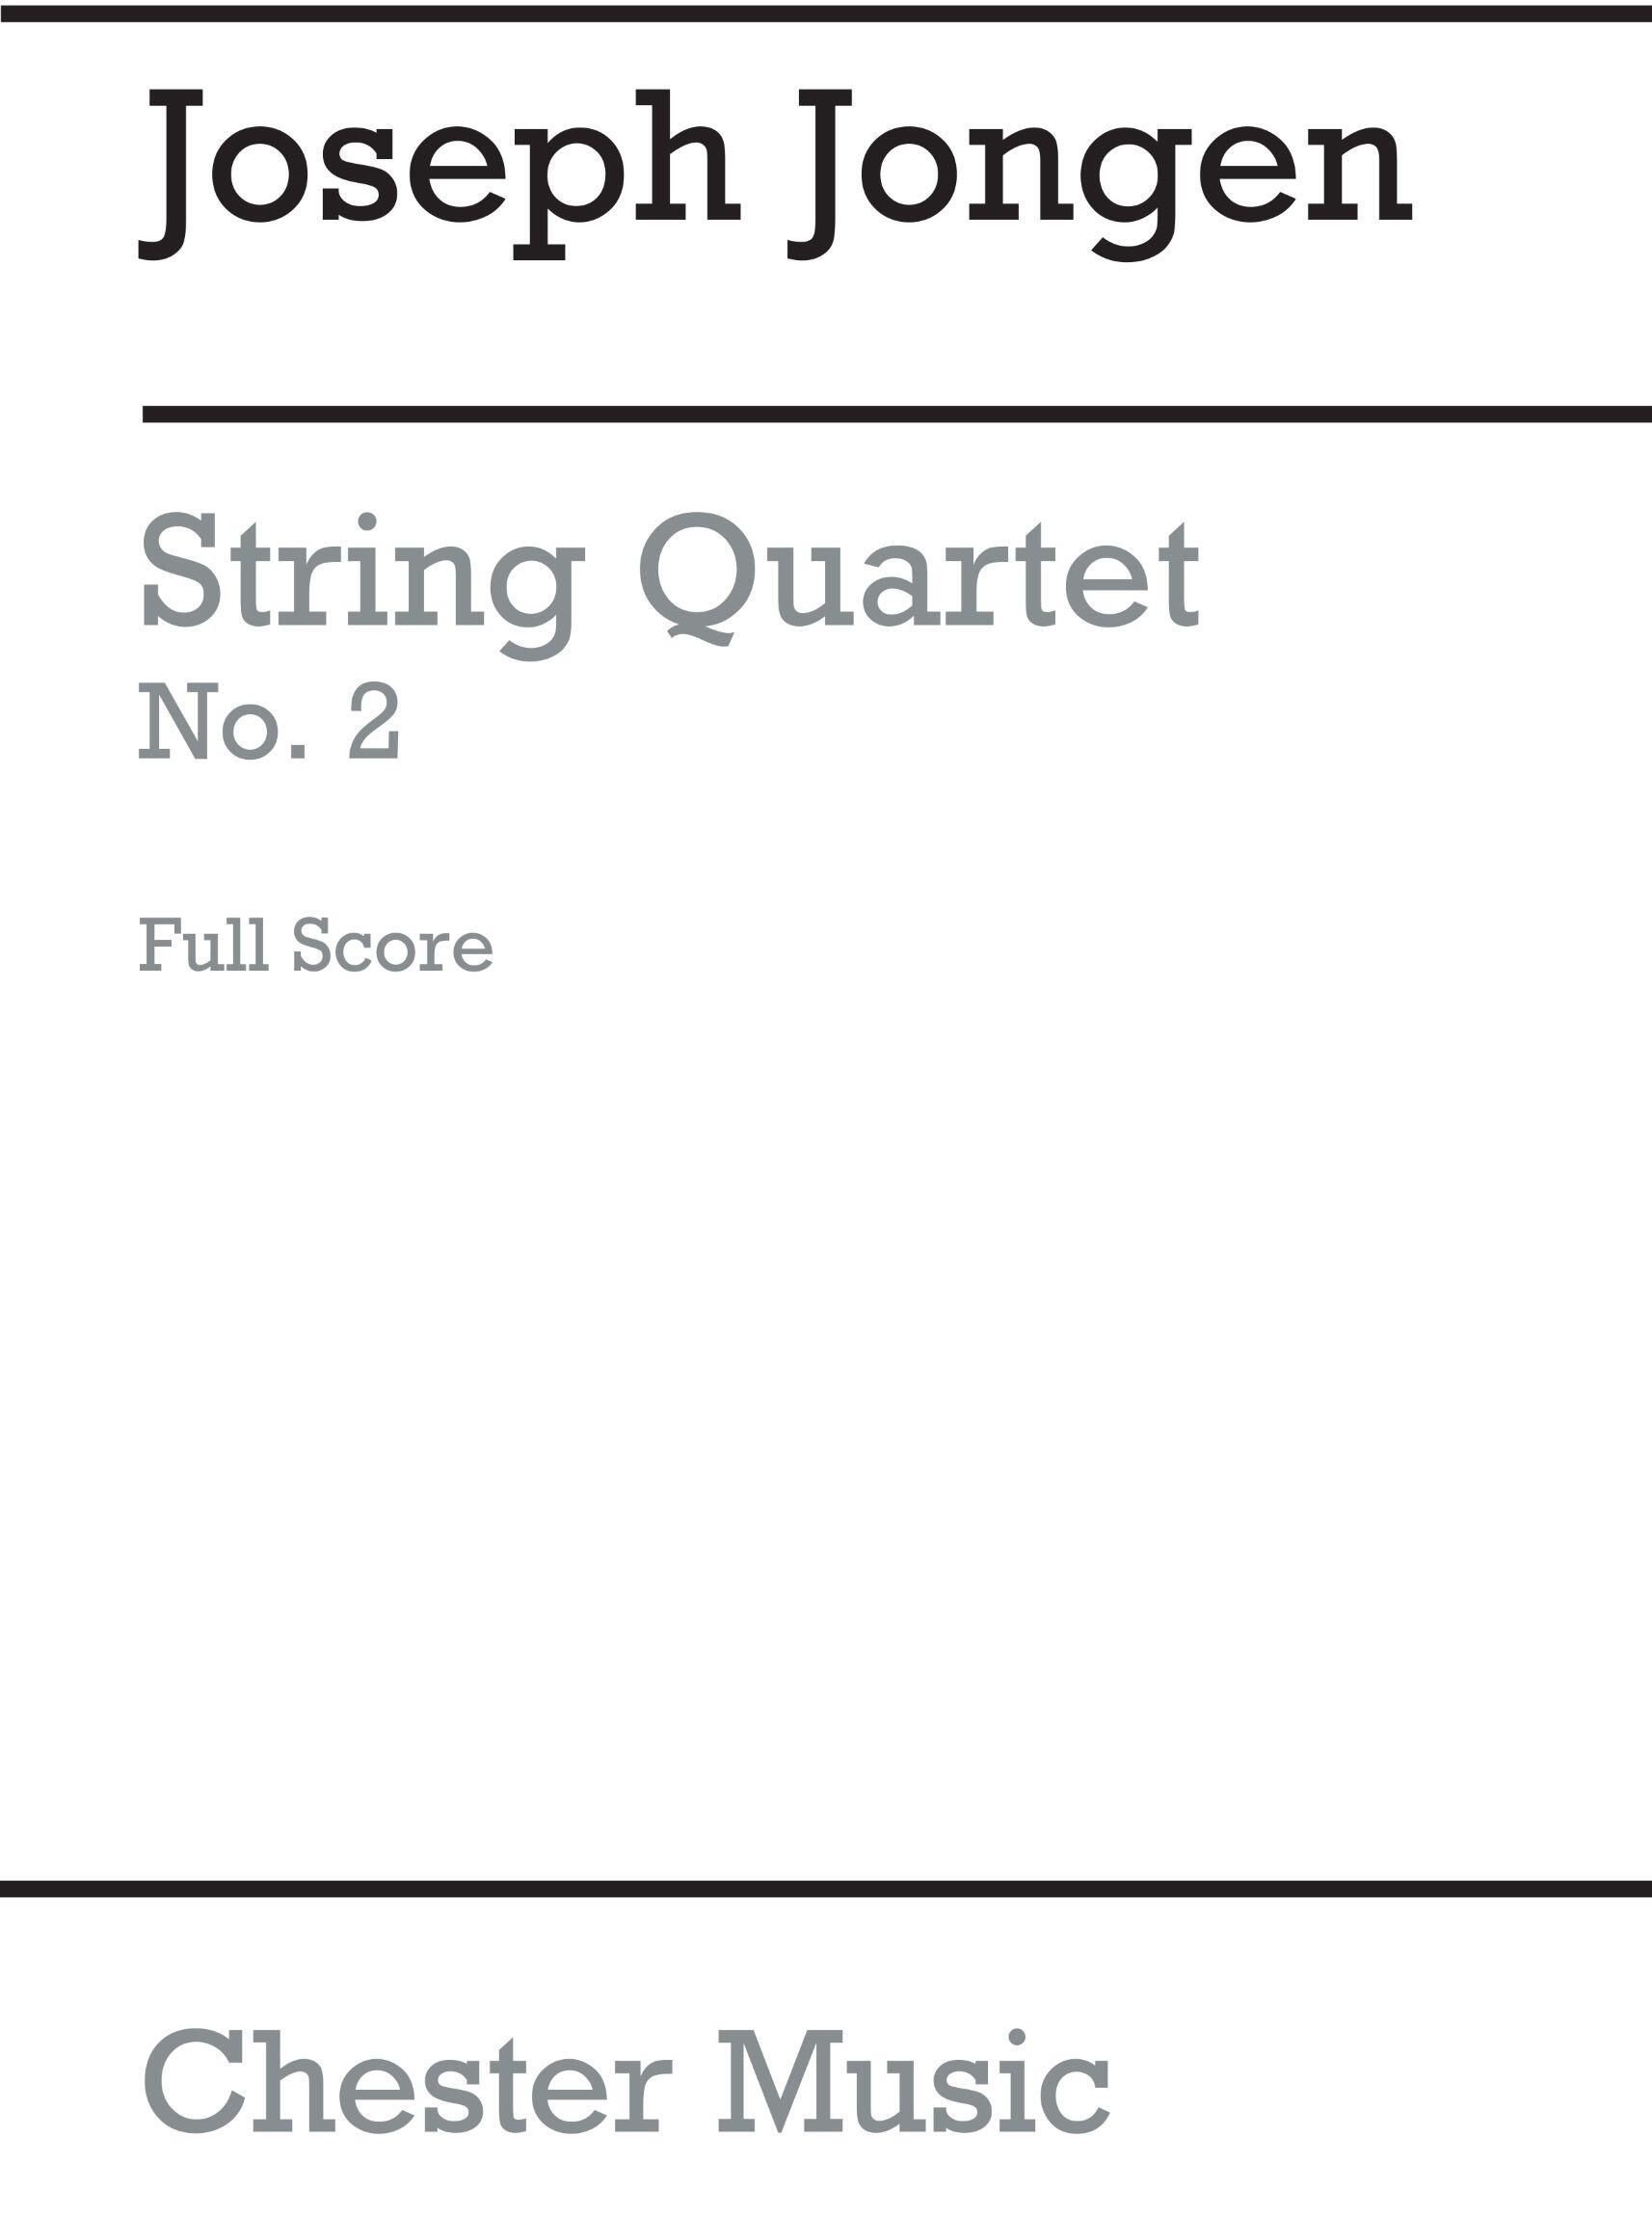 Chester Music String Quartet No.2  Joseph Jongen : photo 1